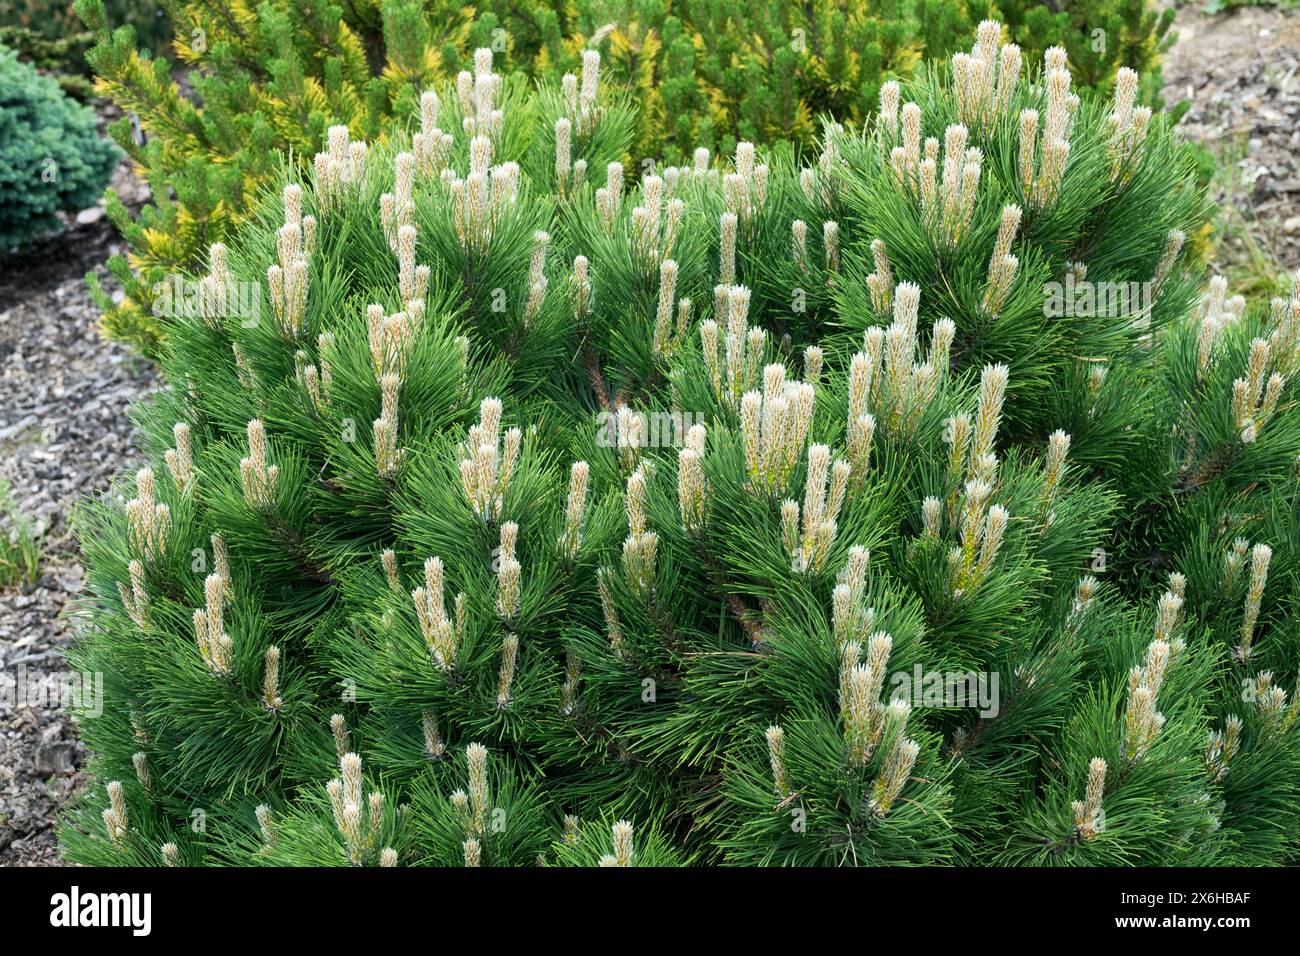 Pinus nigra 'Black Prince' Dwarf Tree Austrian Pine low European Black Pine in garden Stock Photo